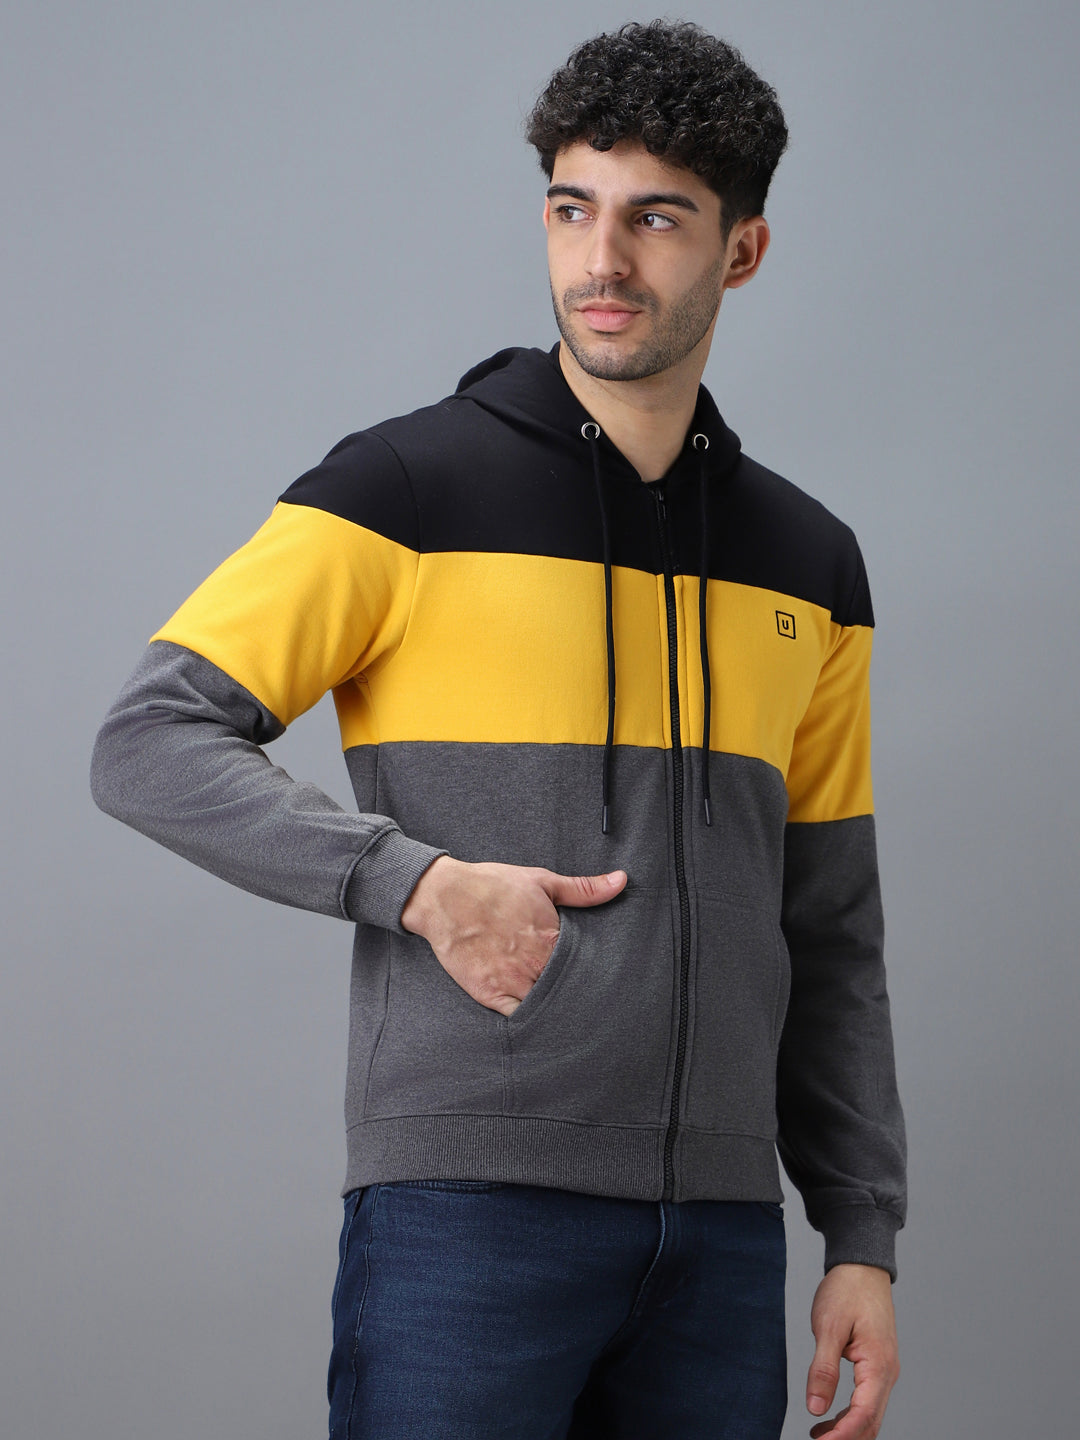 Urbano Fashion Men's Black, Yellow, Charcoal Cotton Zippered Hooded Sweatshirt